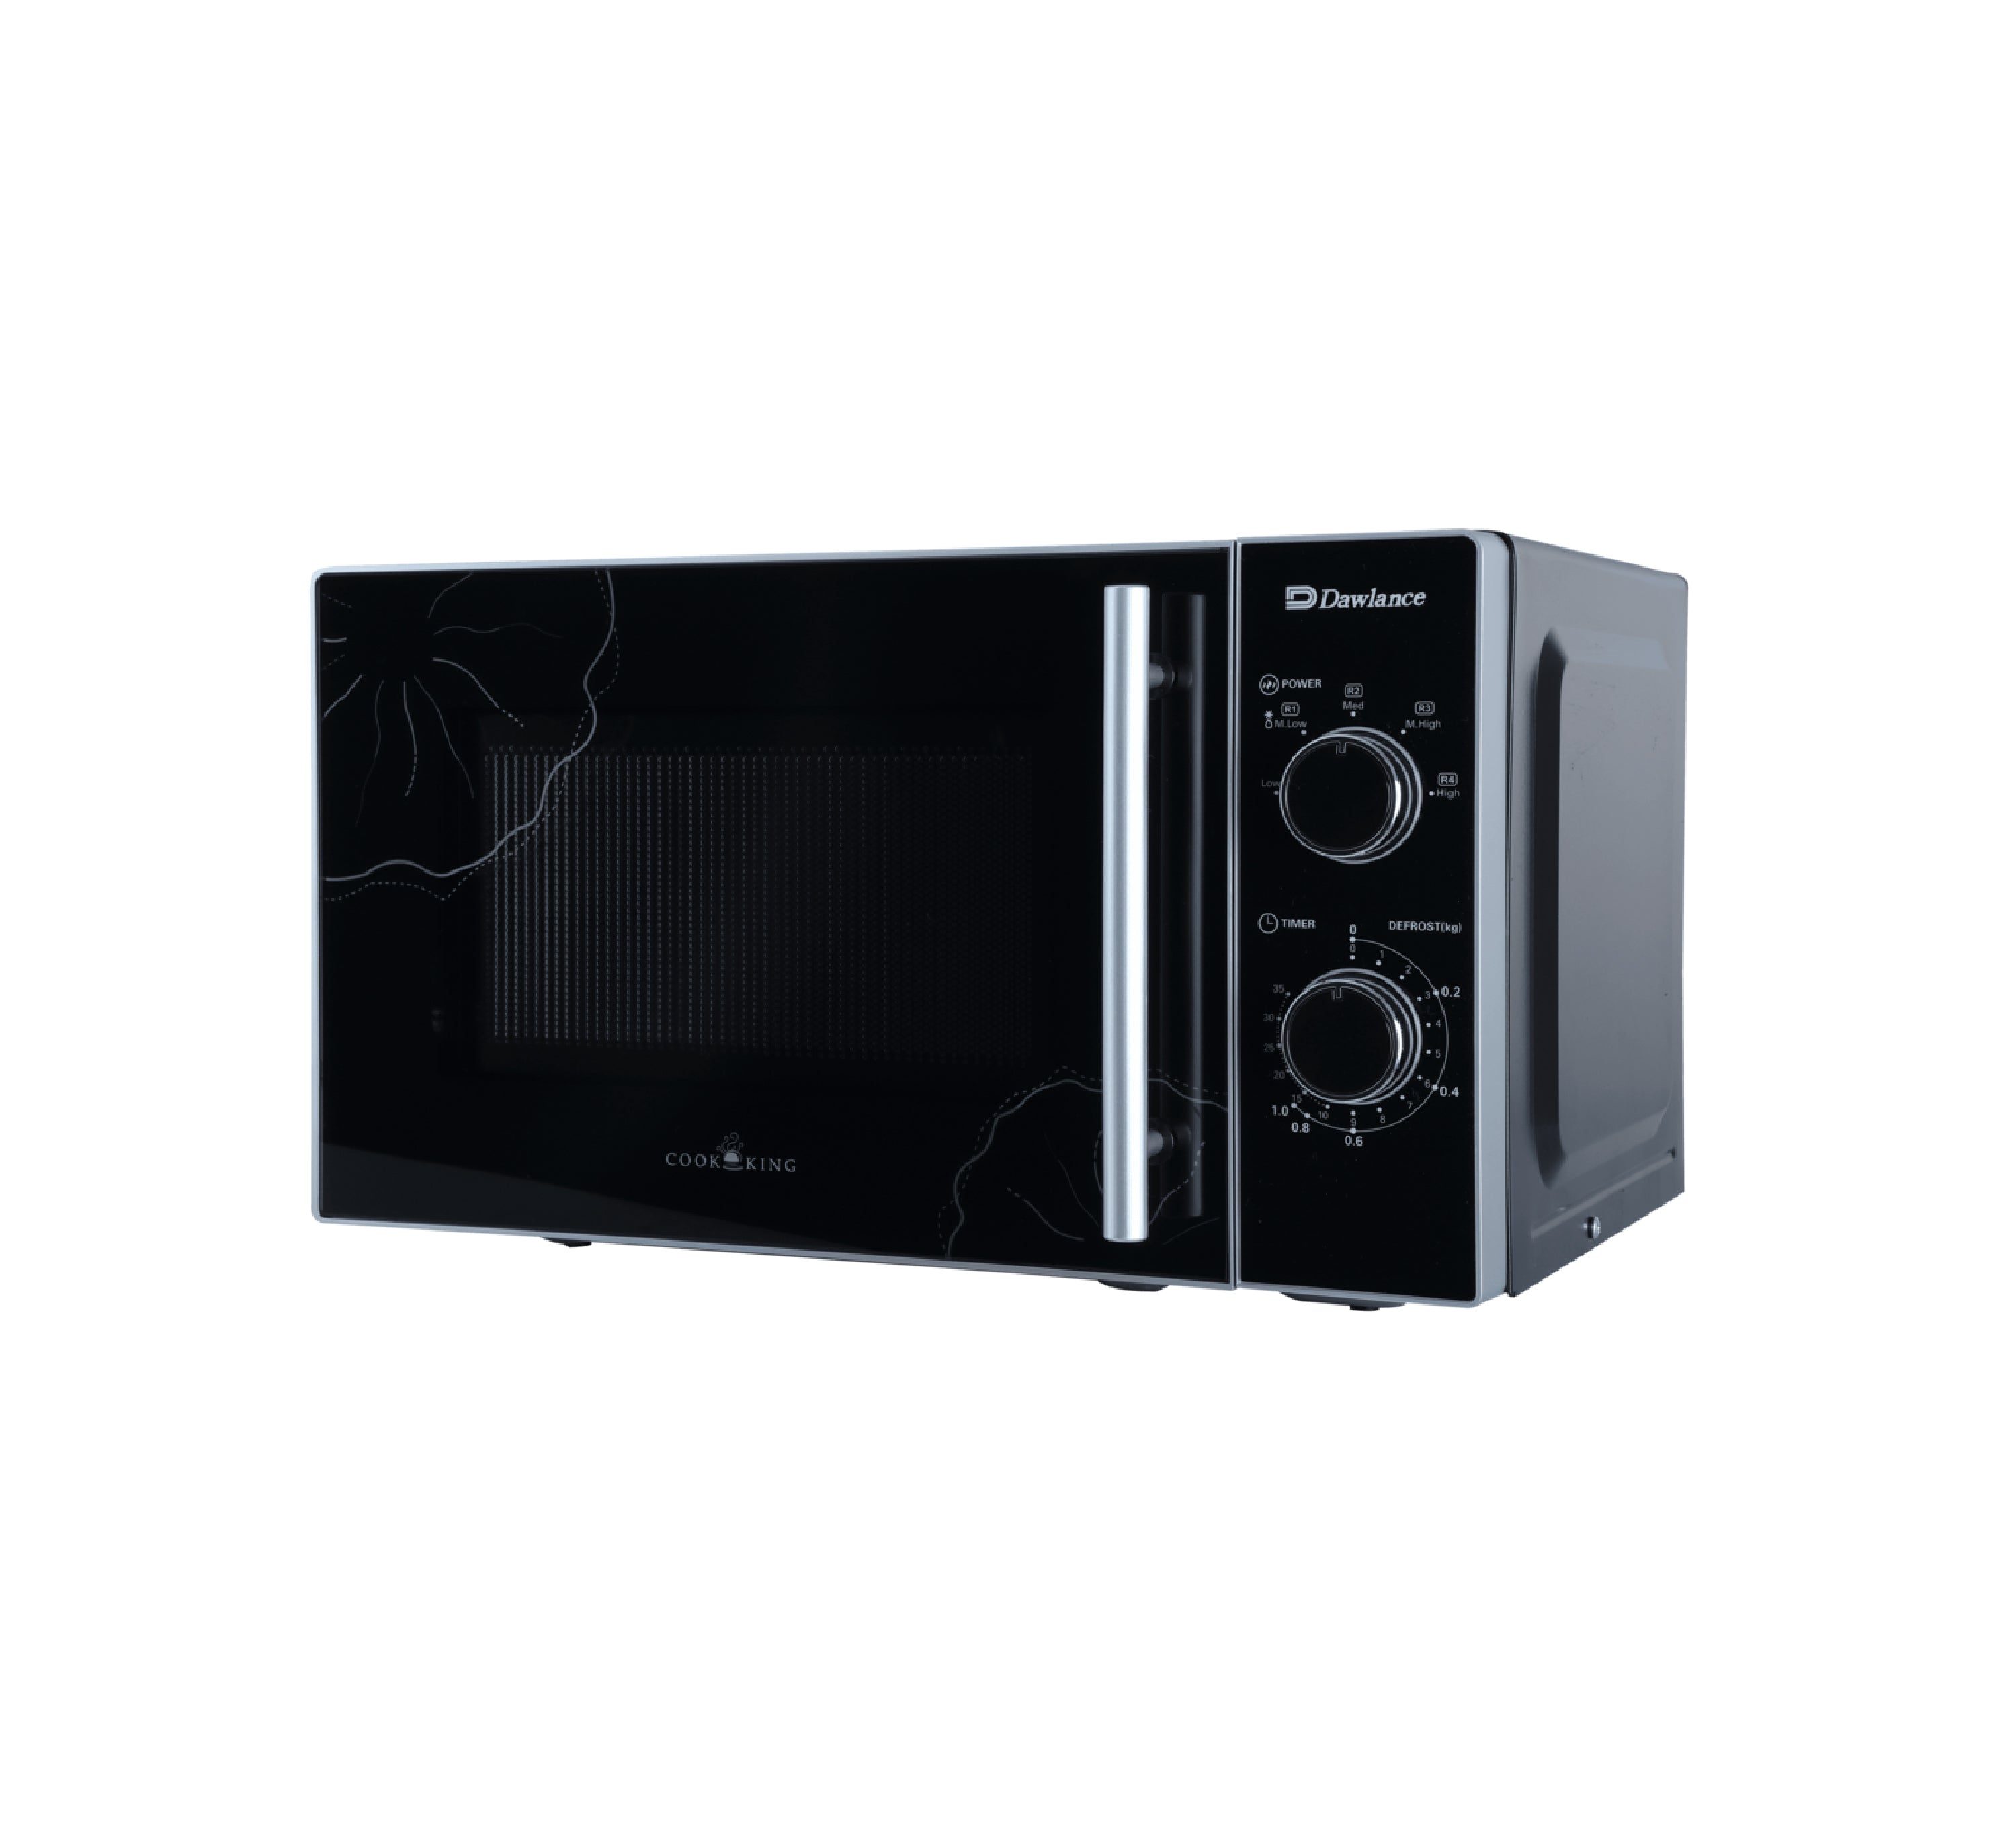 DAWLANCE MD-7   -  Heating Microwave Oven